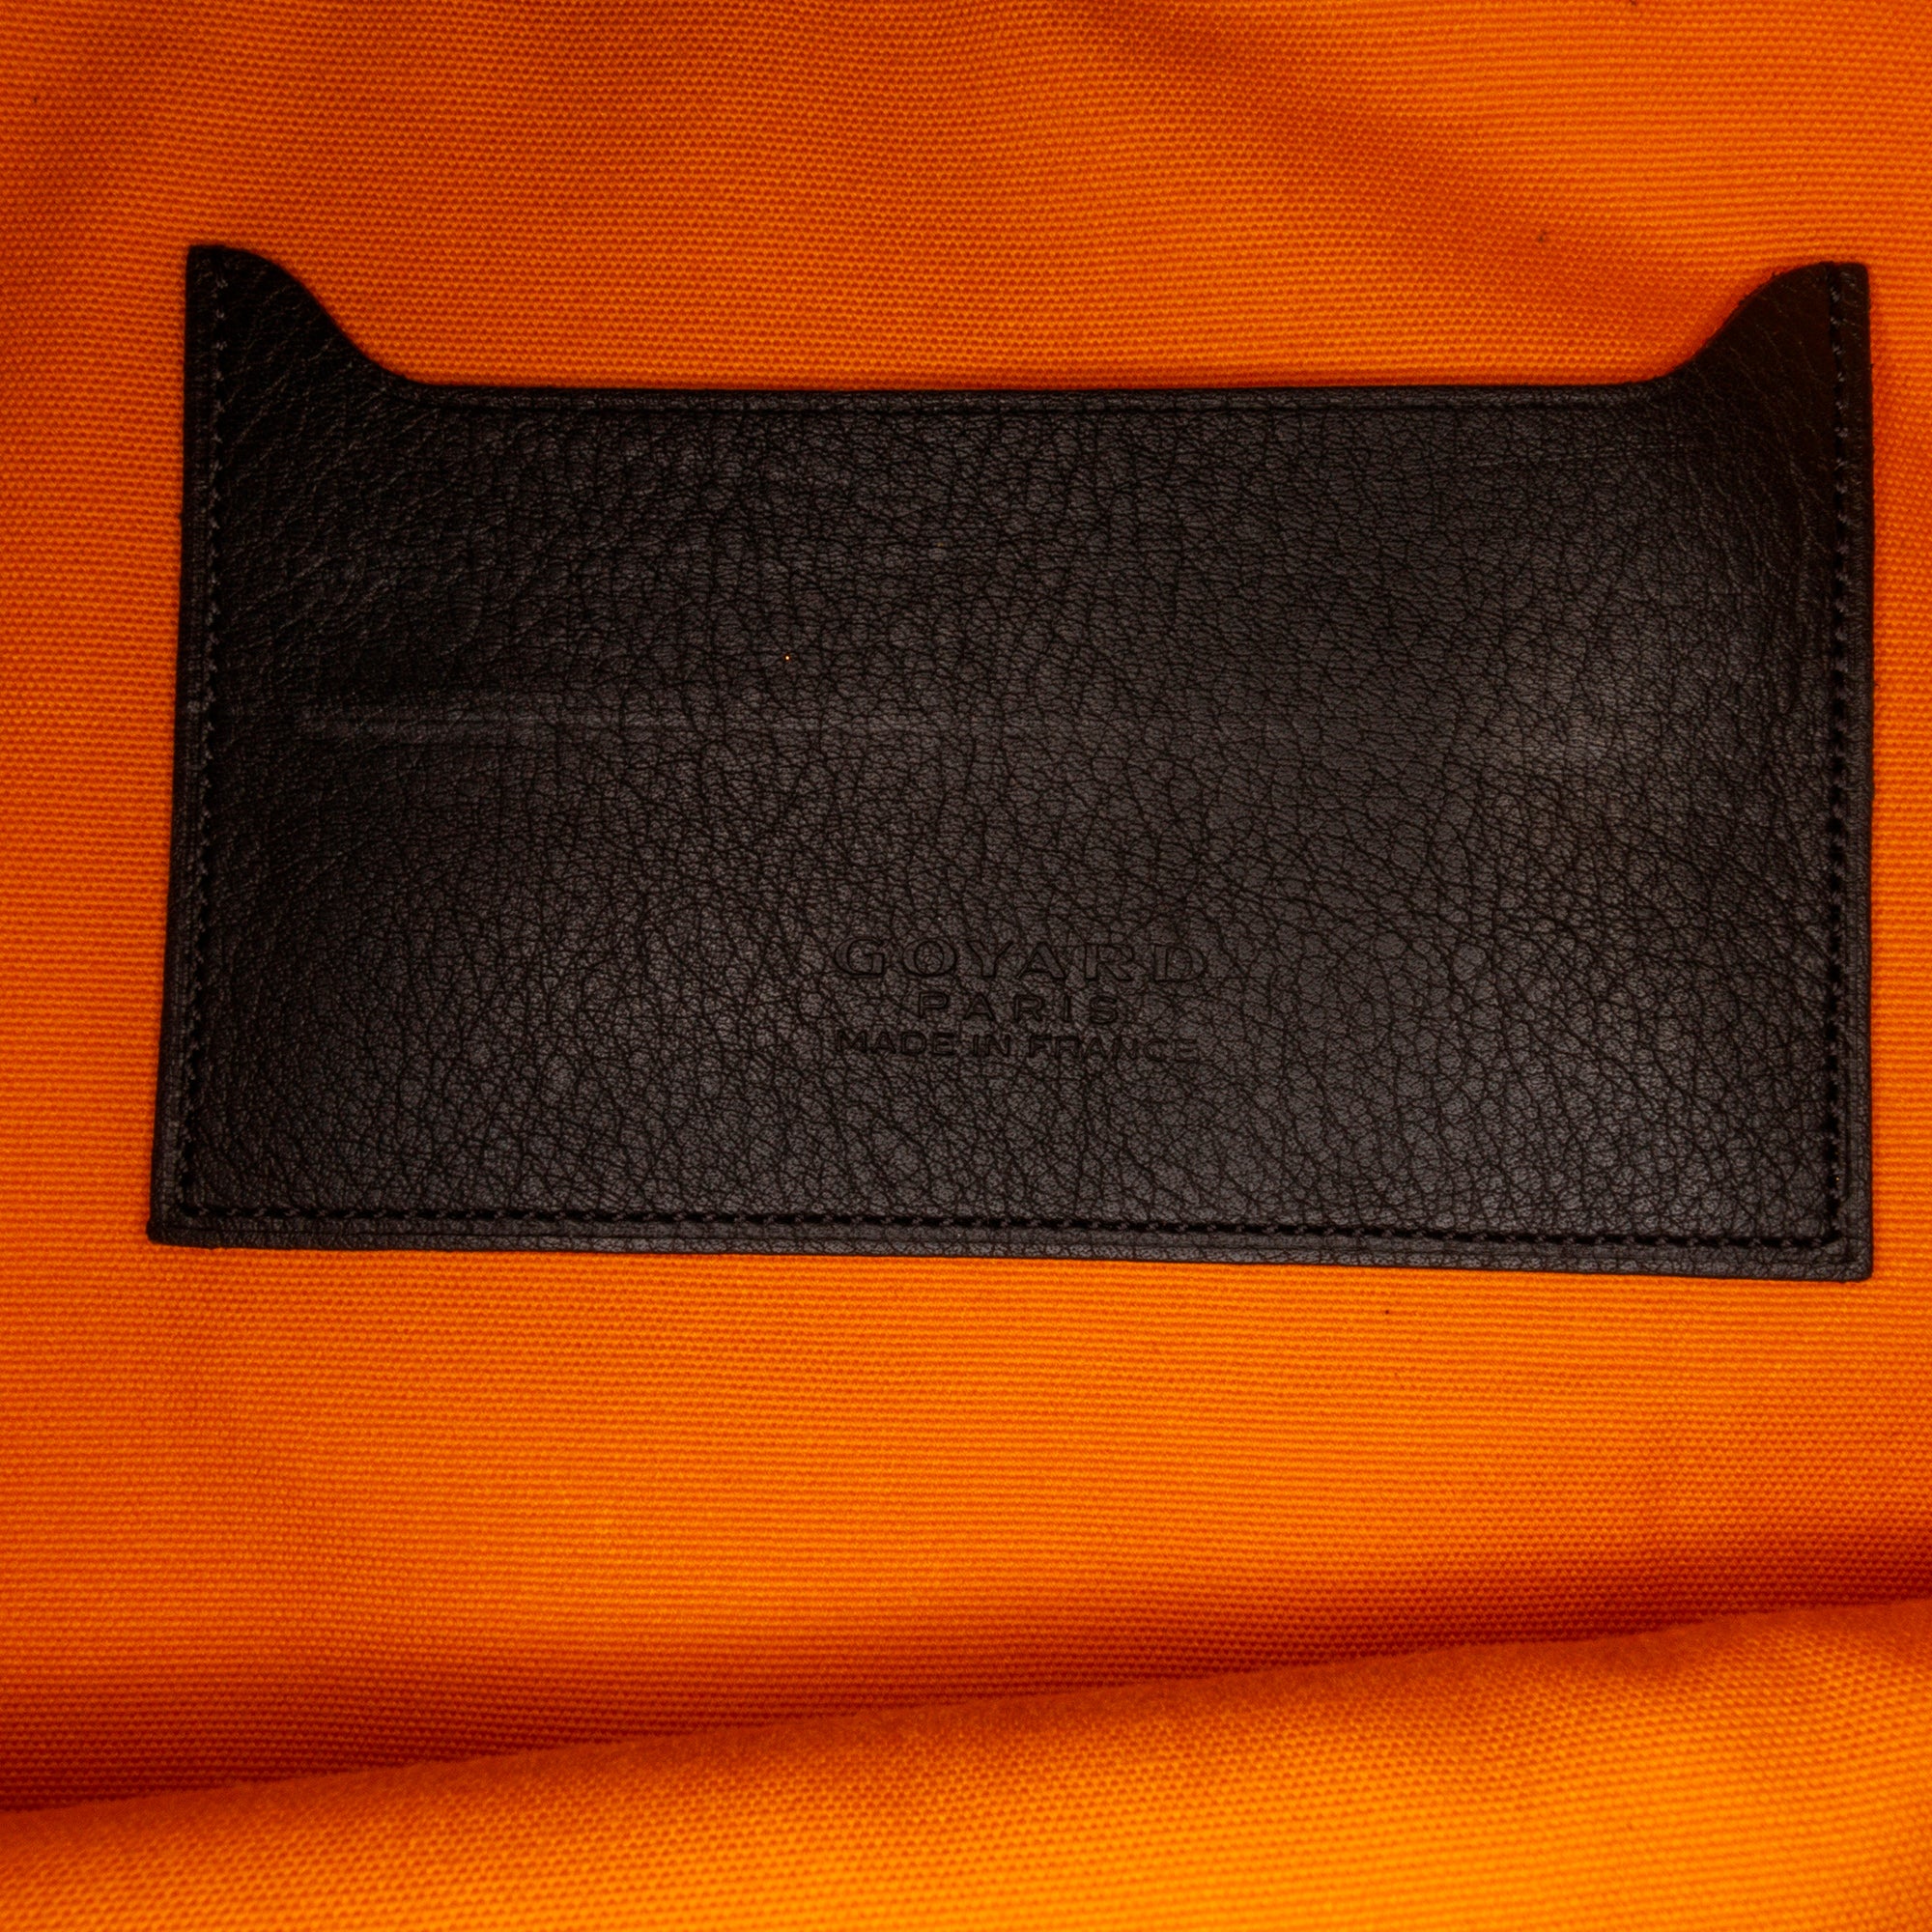 Goyard Black Goyardine Senat PM Pouch, Designer Brand, Authentic Goyard